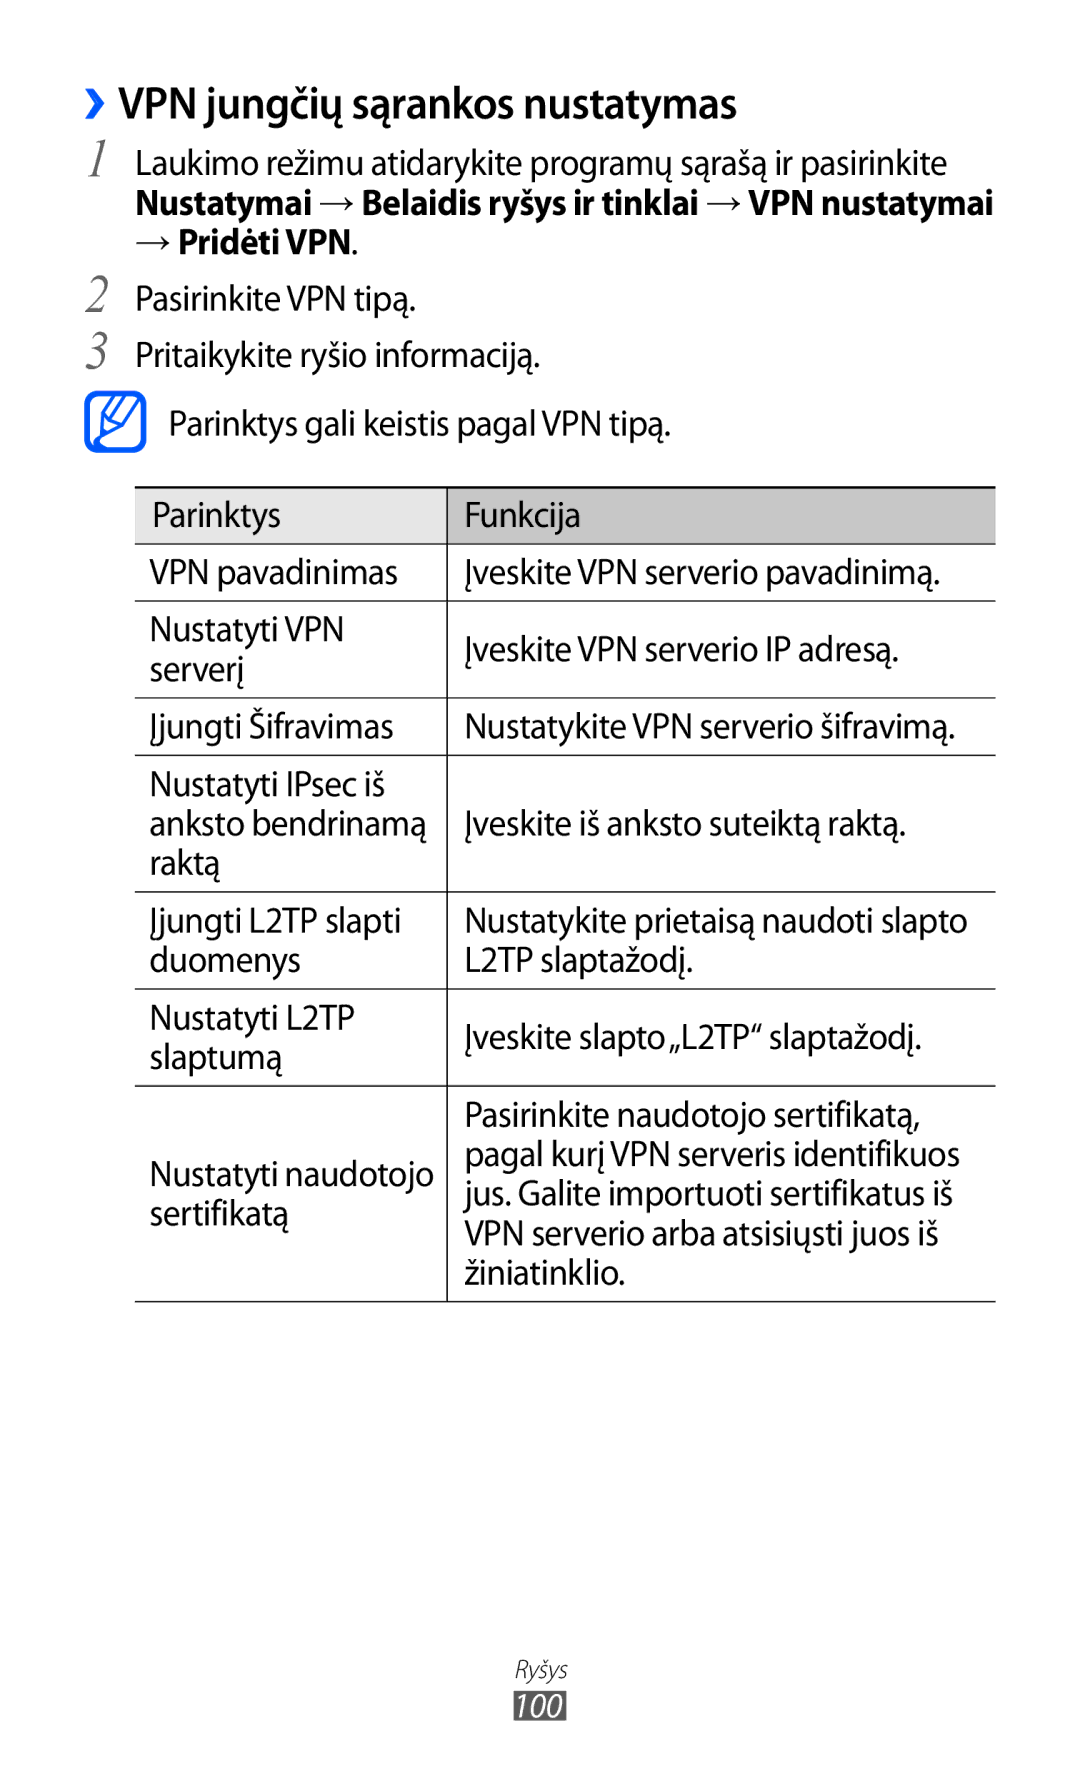 Samsung GT-S6102SKASEB manual ››VPN jungčių sąrankos nustatymas, → Pridėti VPN 